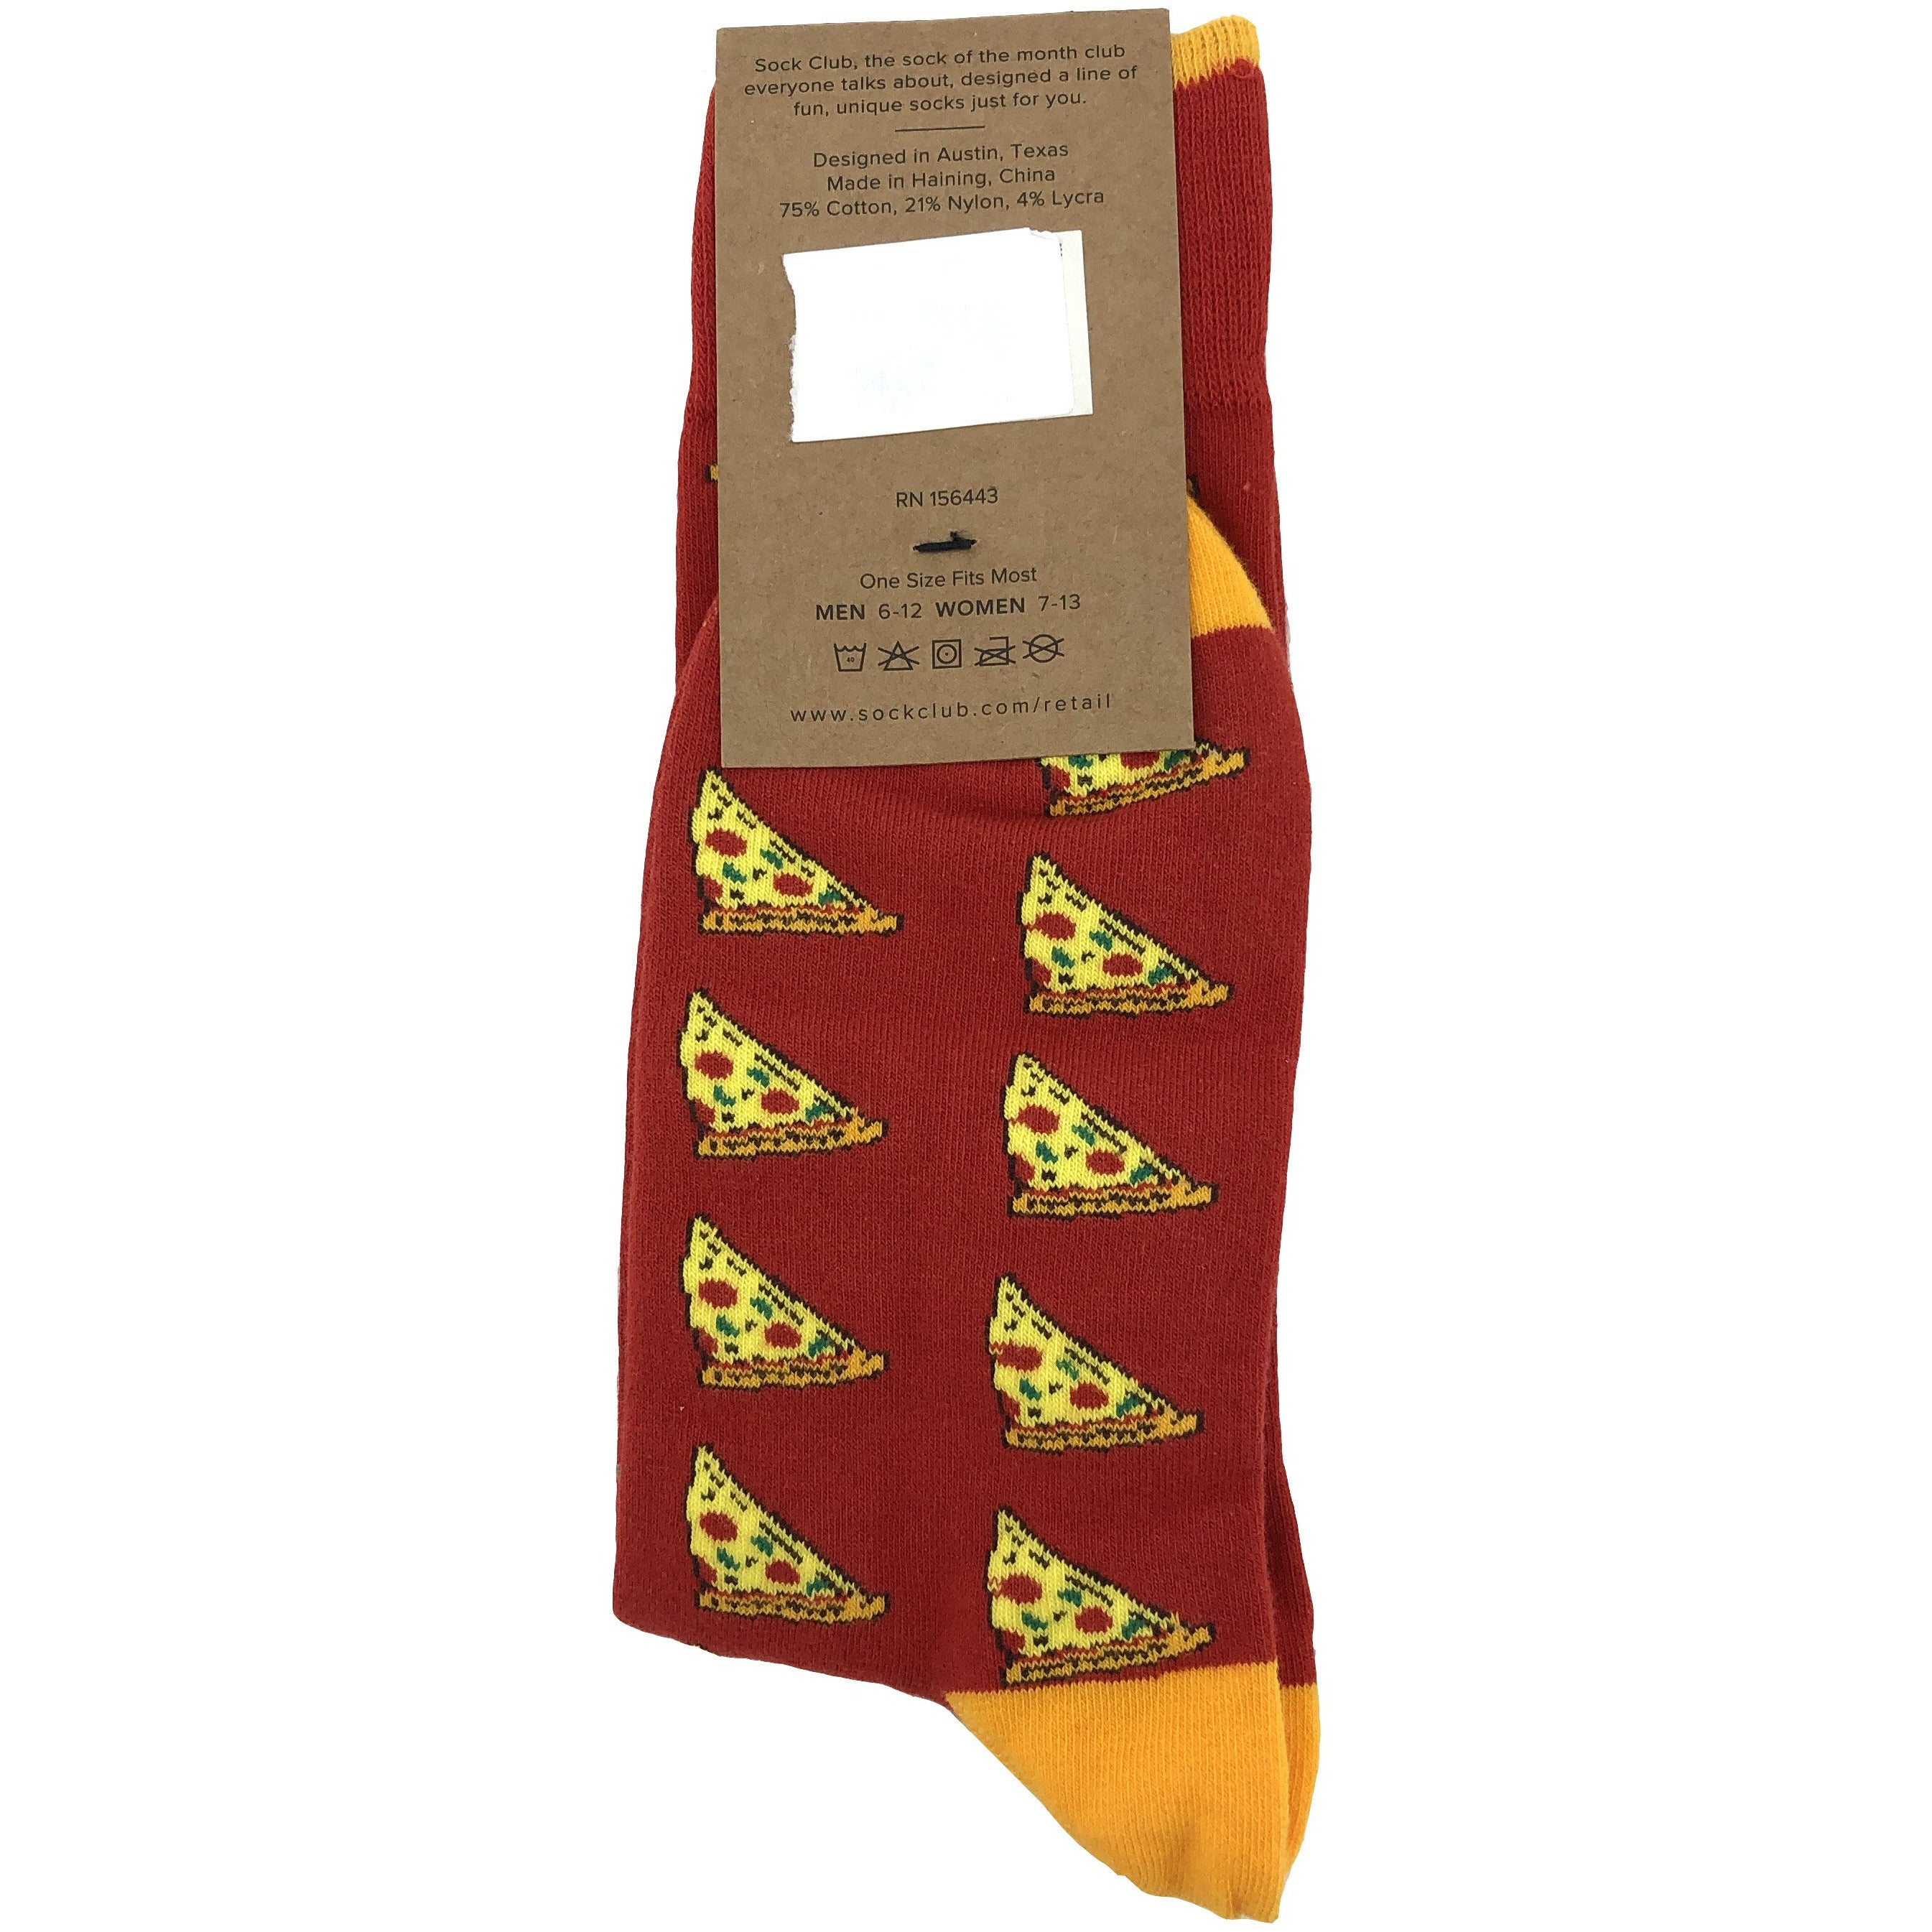 Sock Club novelty socks for men and women with Pizza slice design